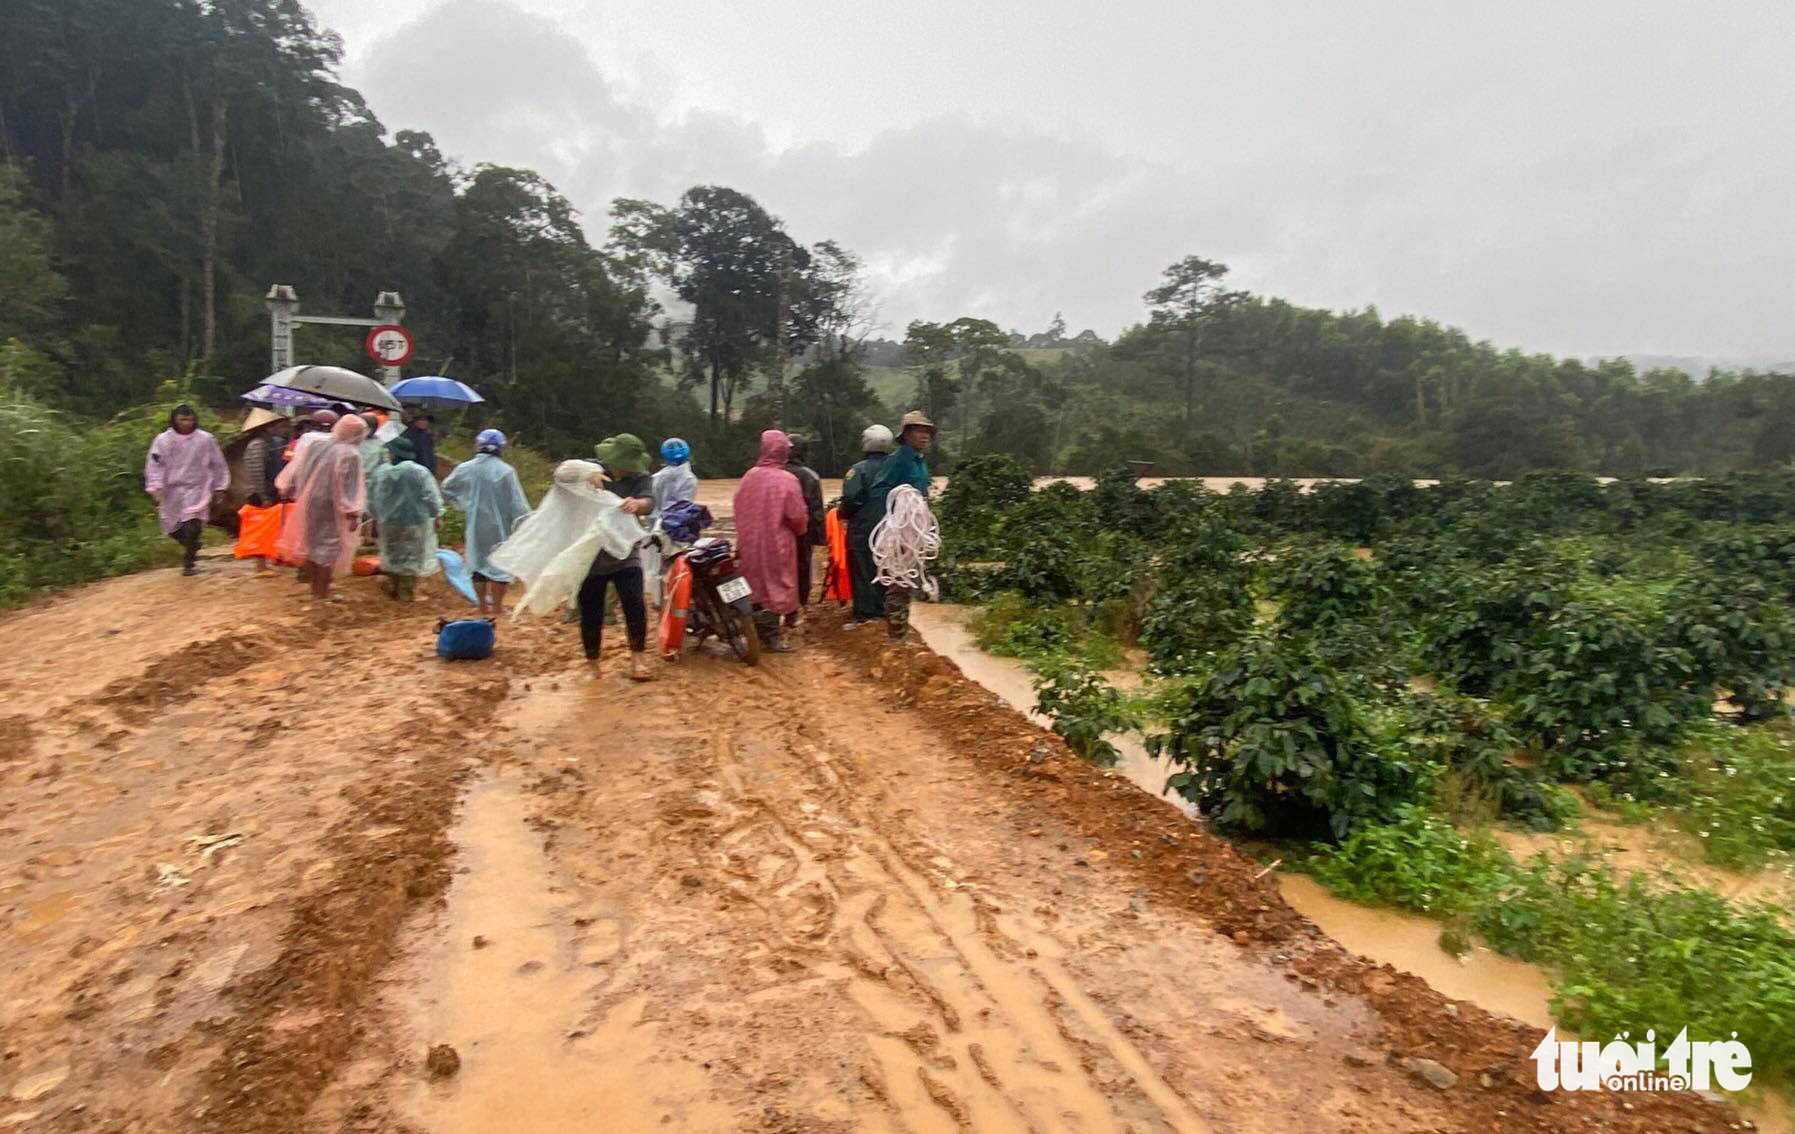 Tourists swept away by flood during trekking tour at Vietnam national park